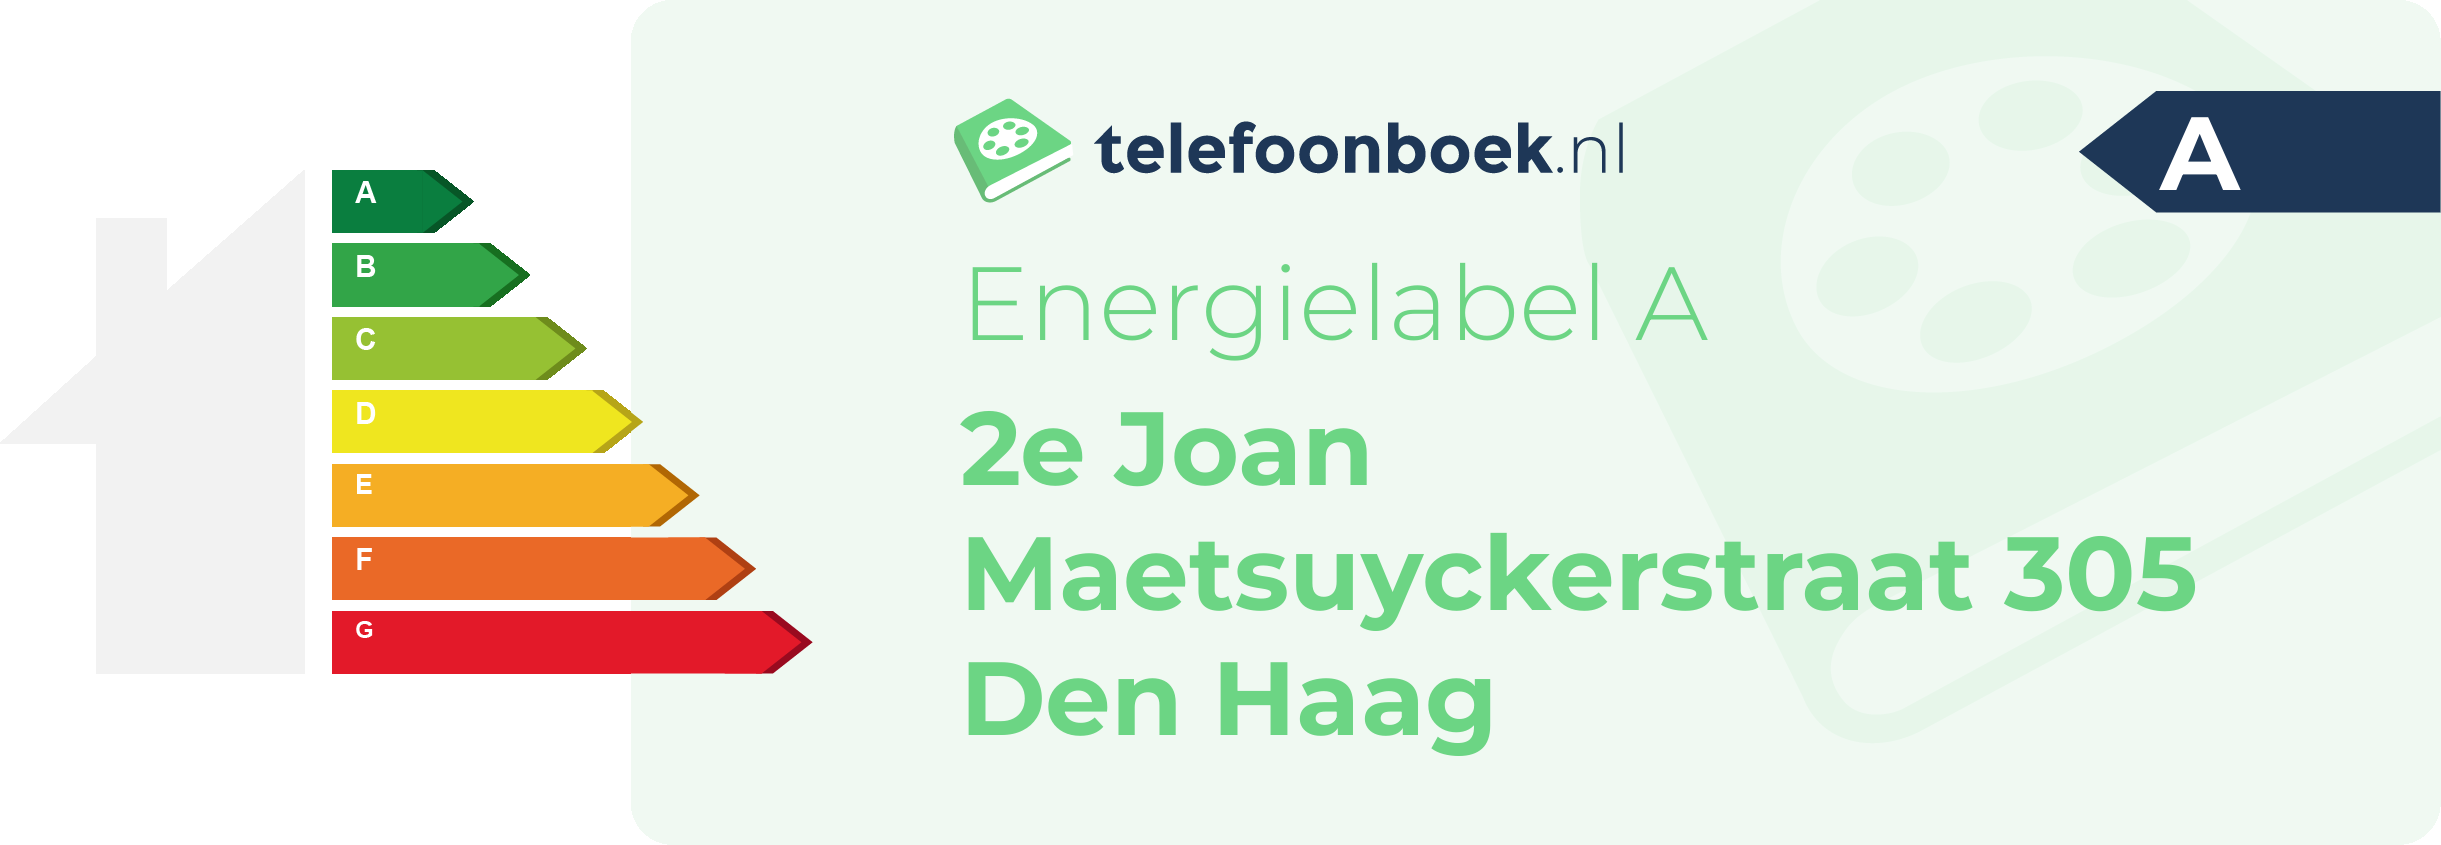 Energielabel 2e Joan Maetsuyckerstraat 305 Den Haag